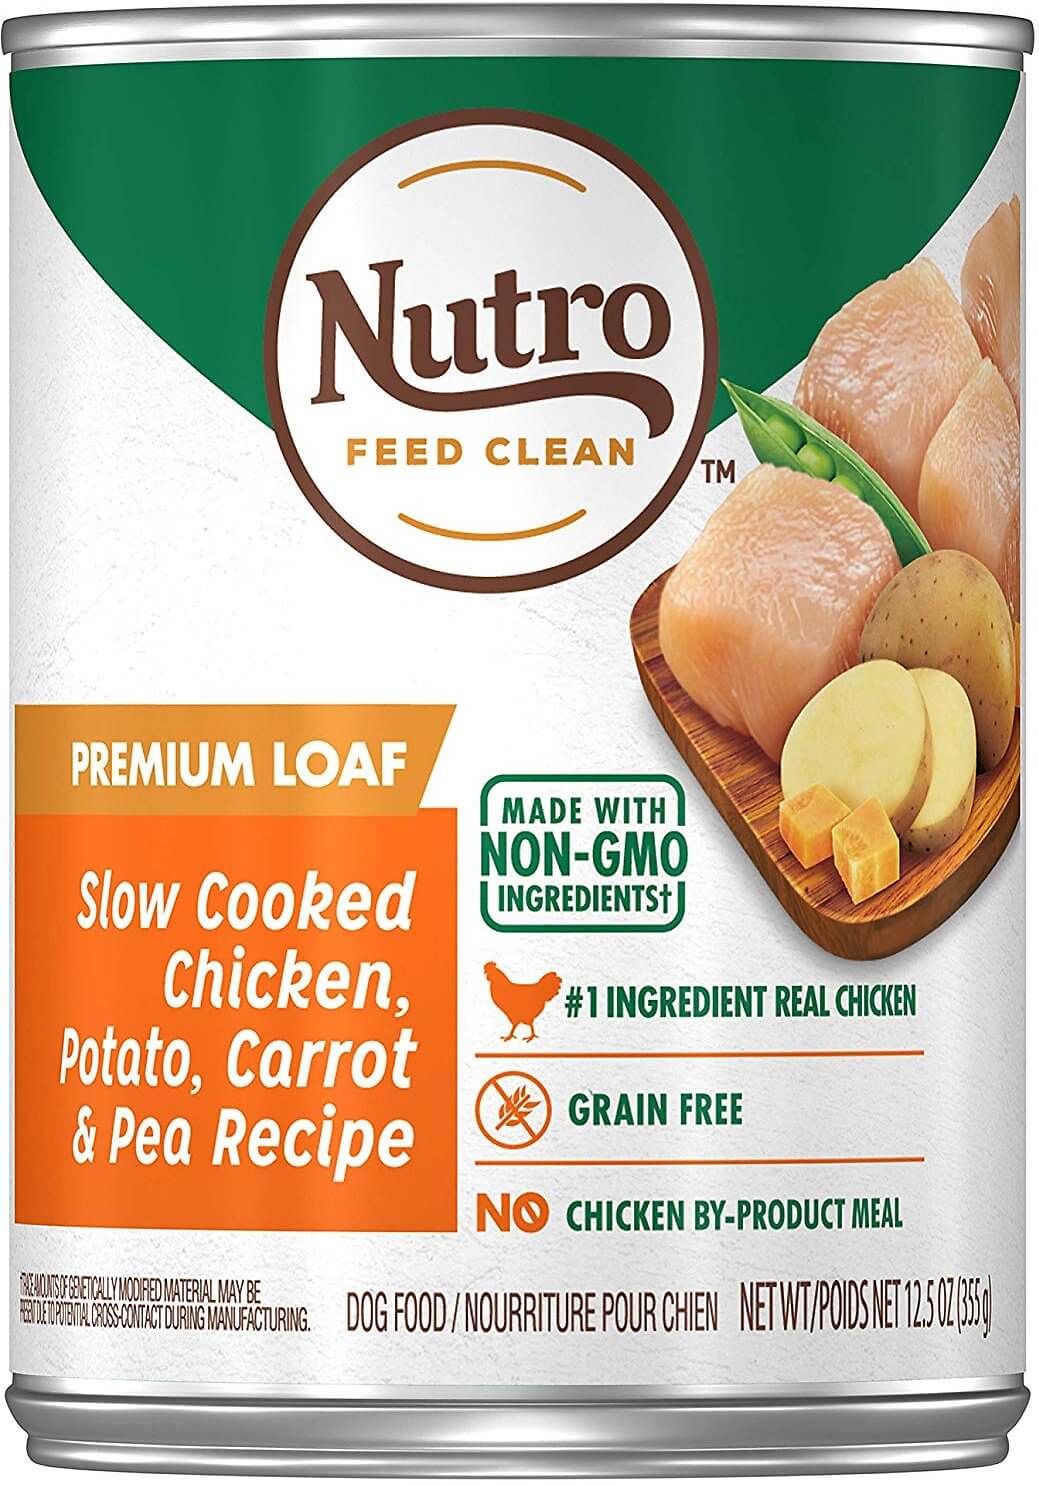 nutro dog food samples